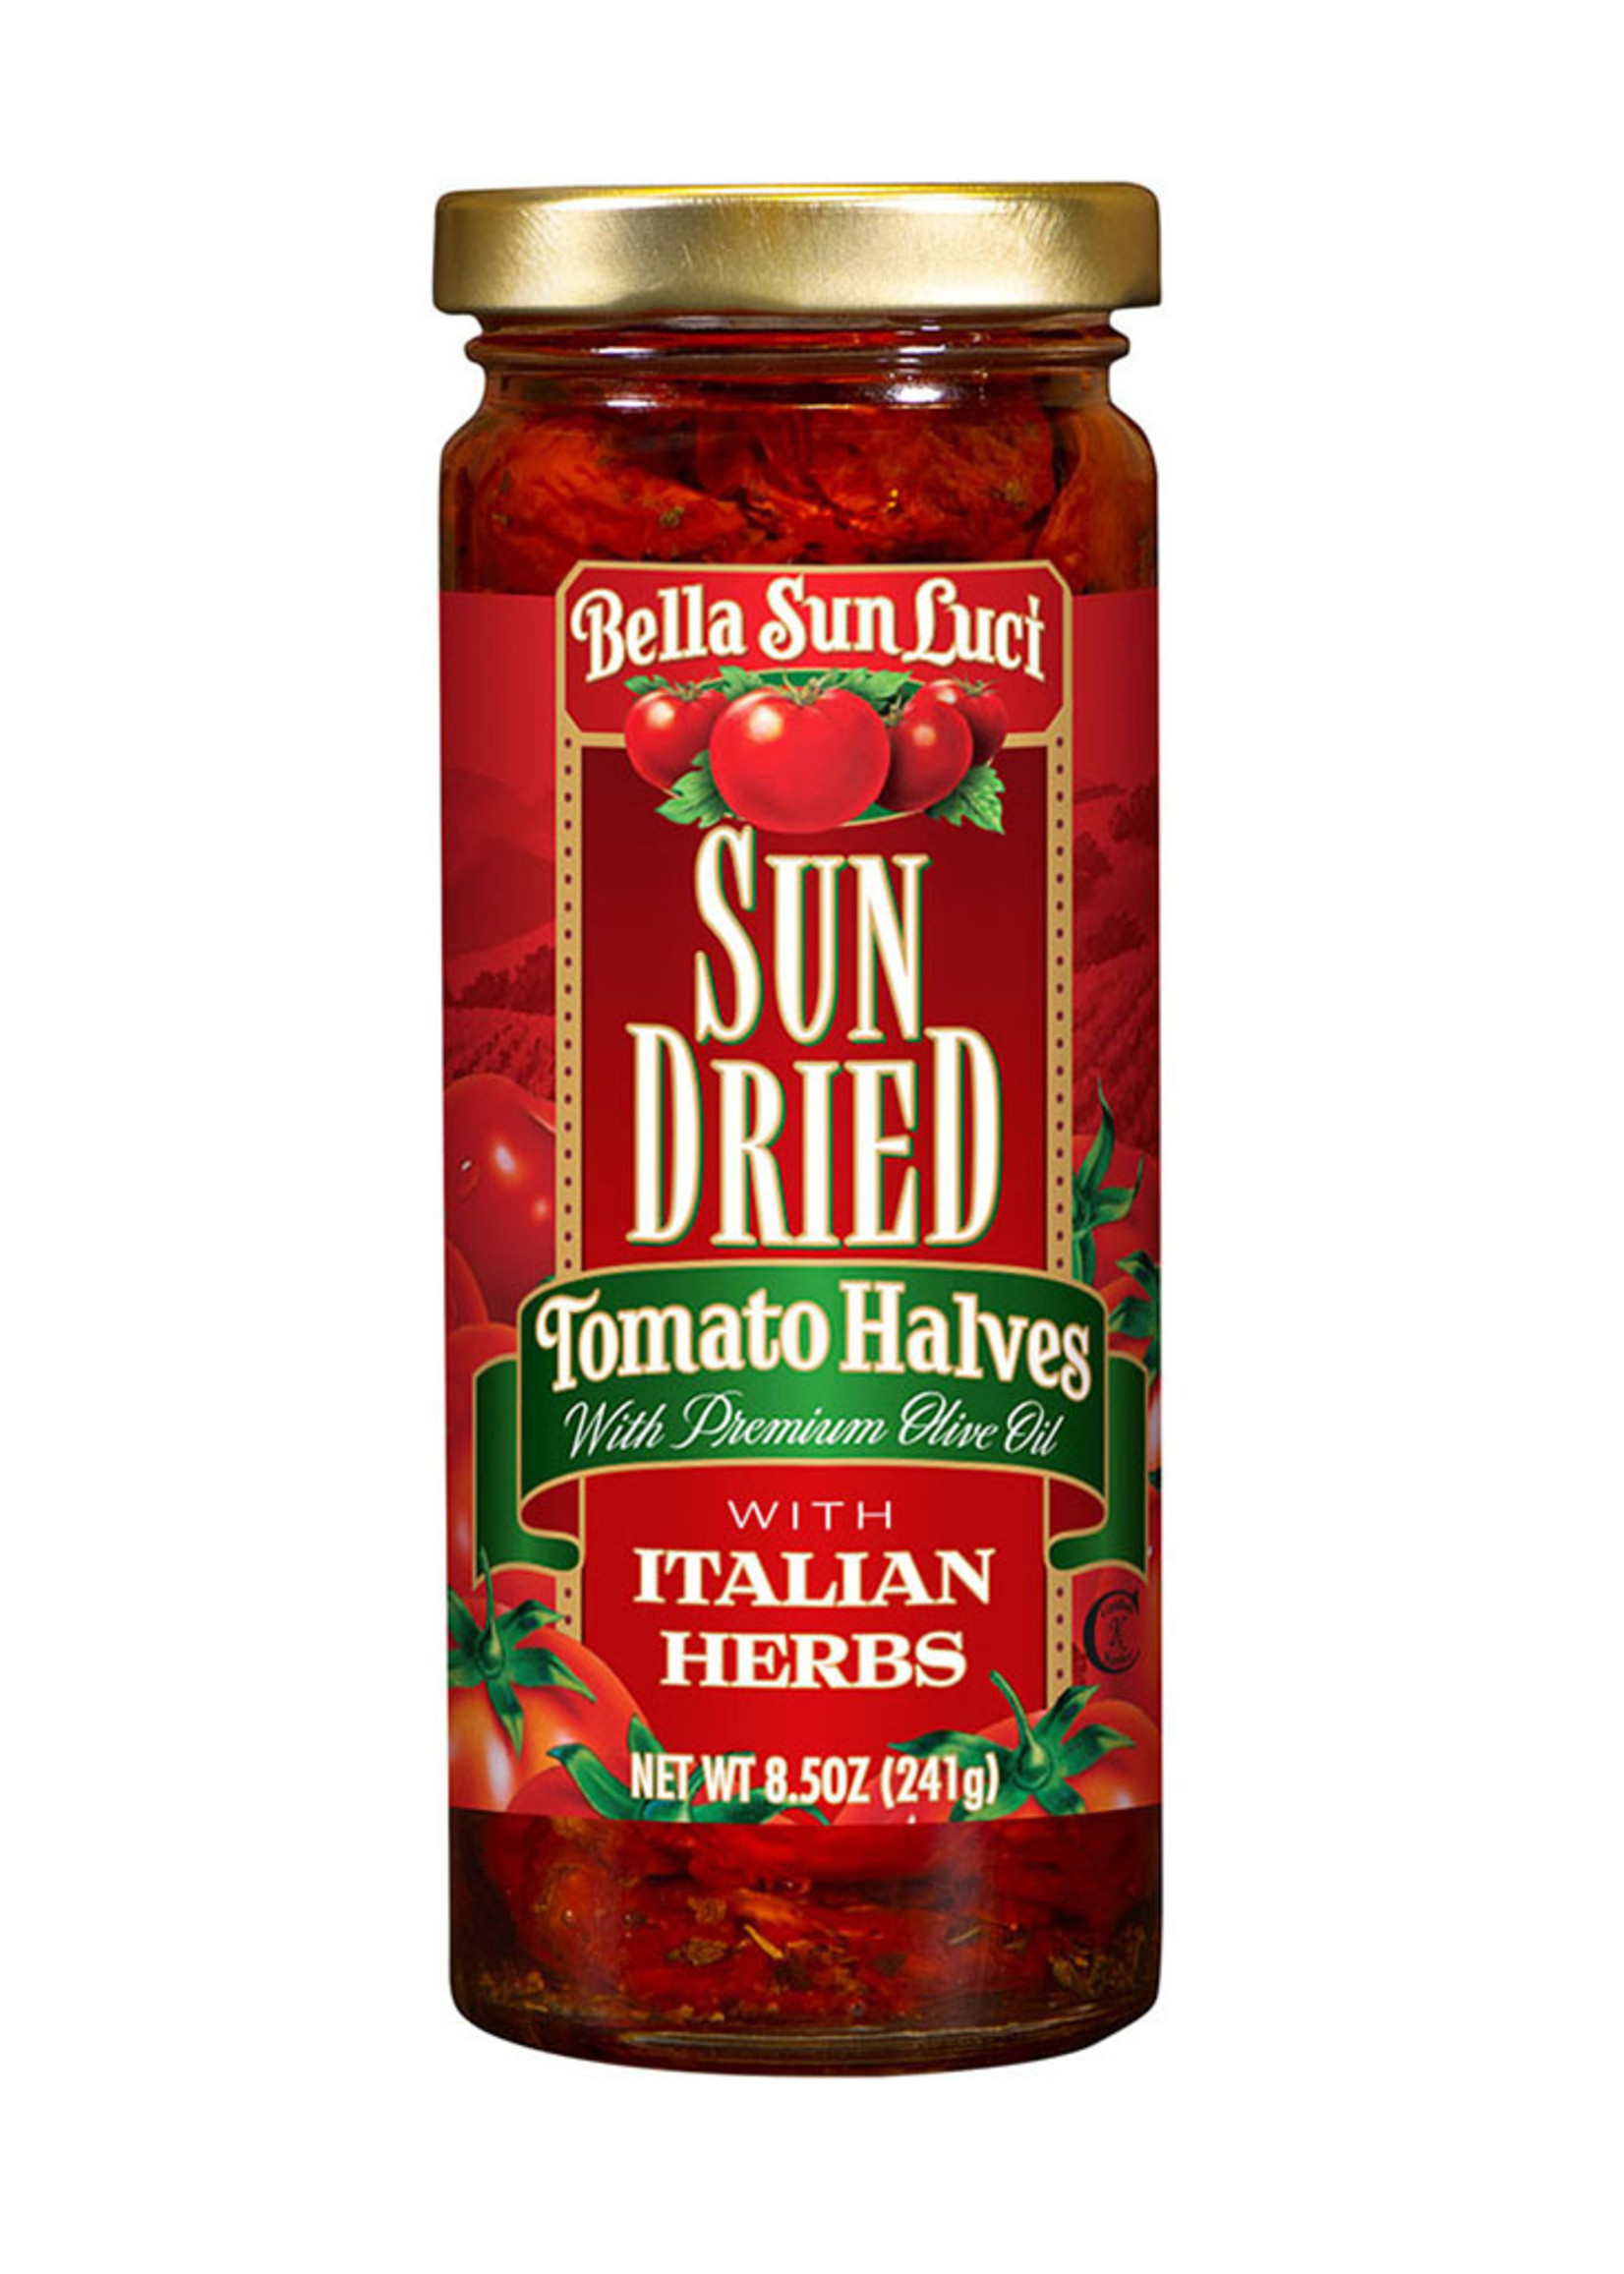 Mooney Farms Bella Sun Luci Sun Dried Tomato Halves In Olive Oil With  Italian Herbs 8.5oz